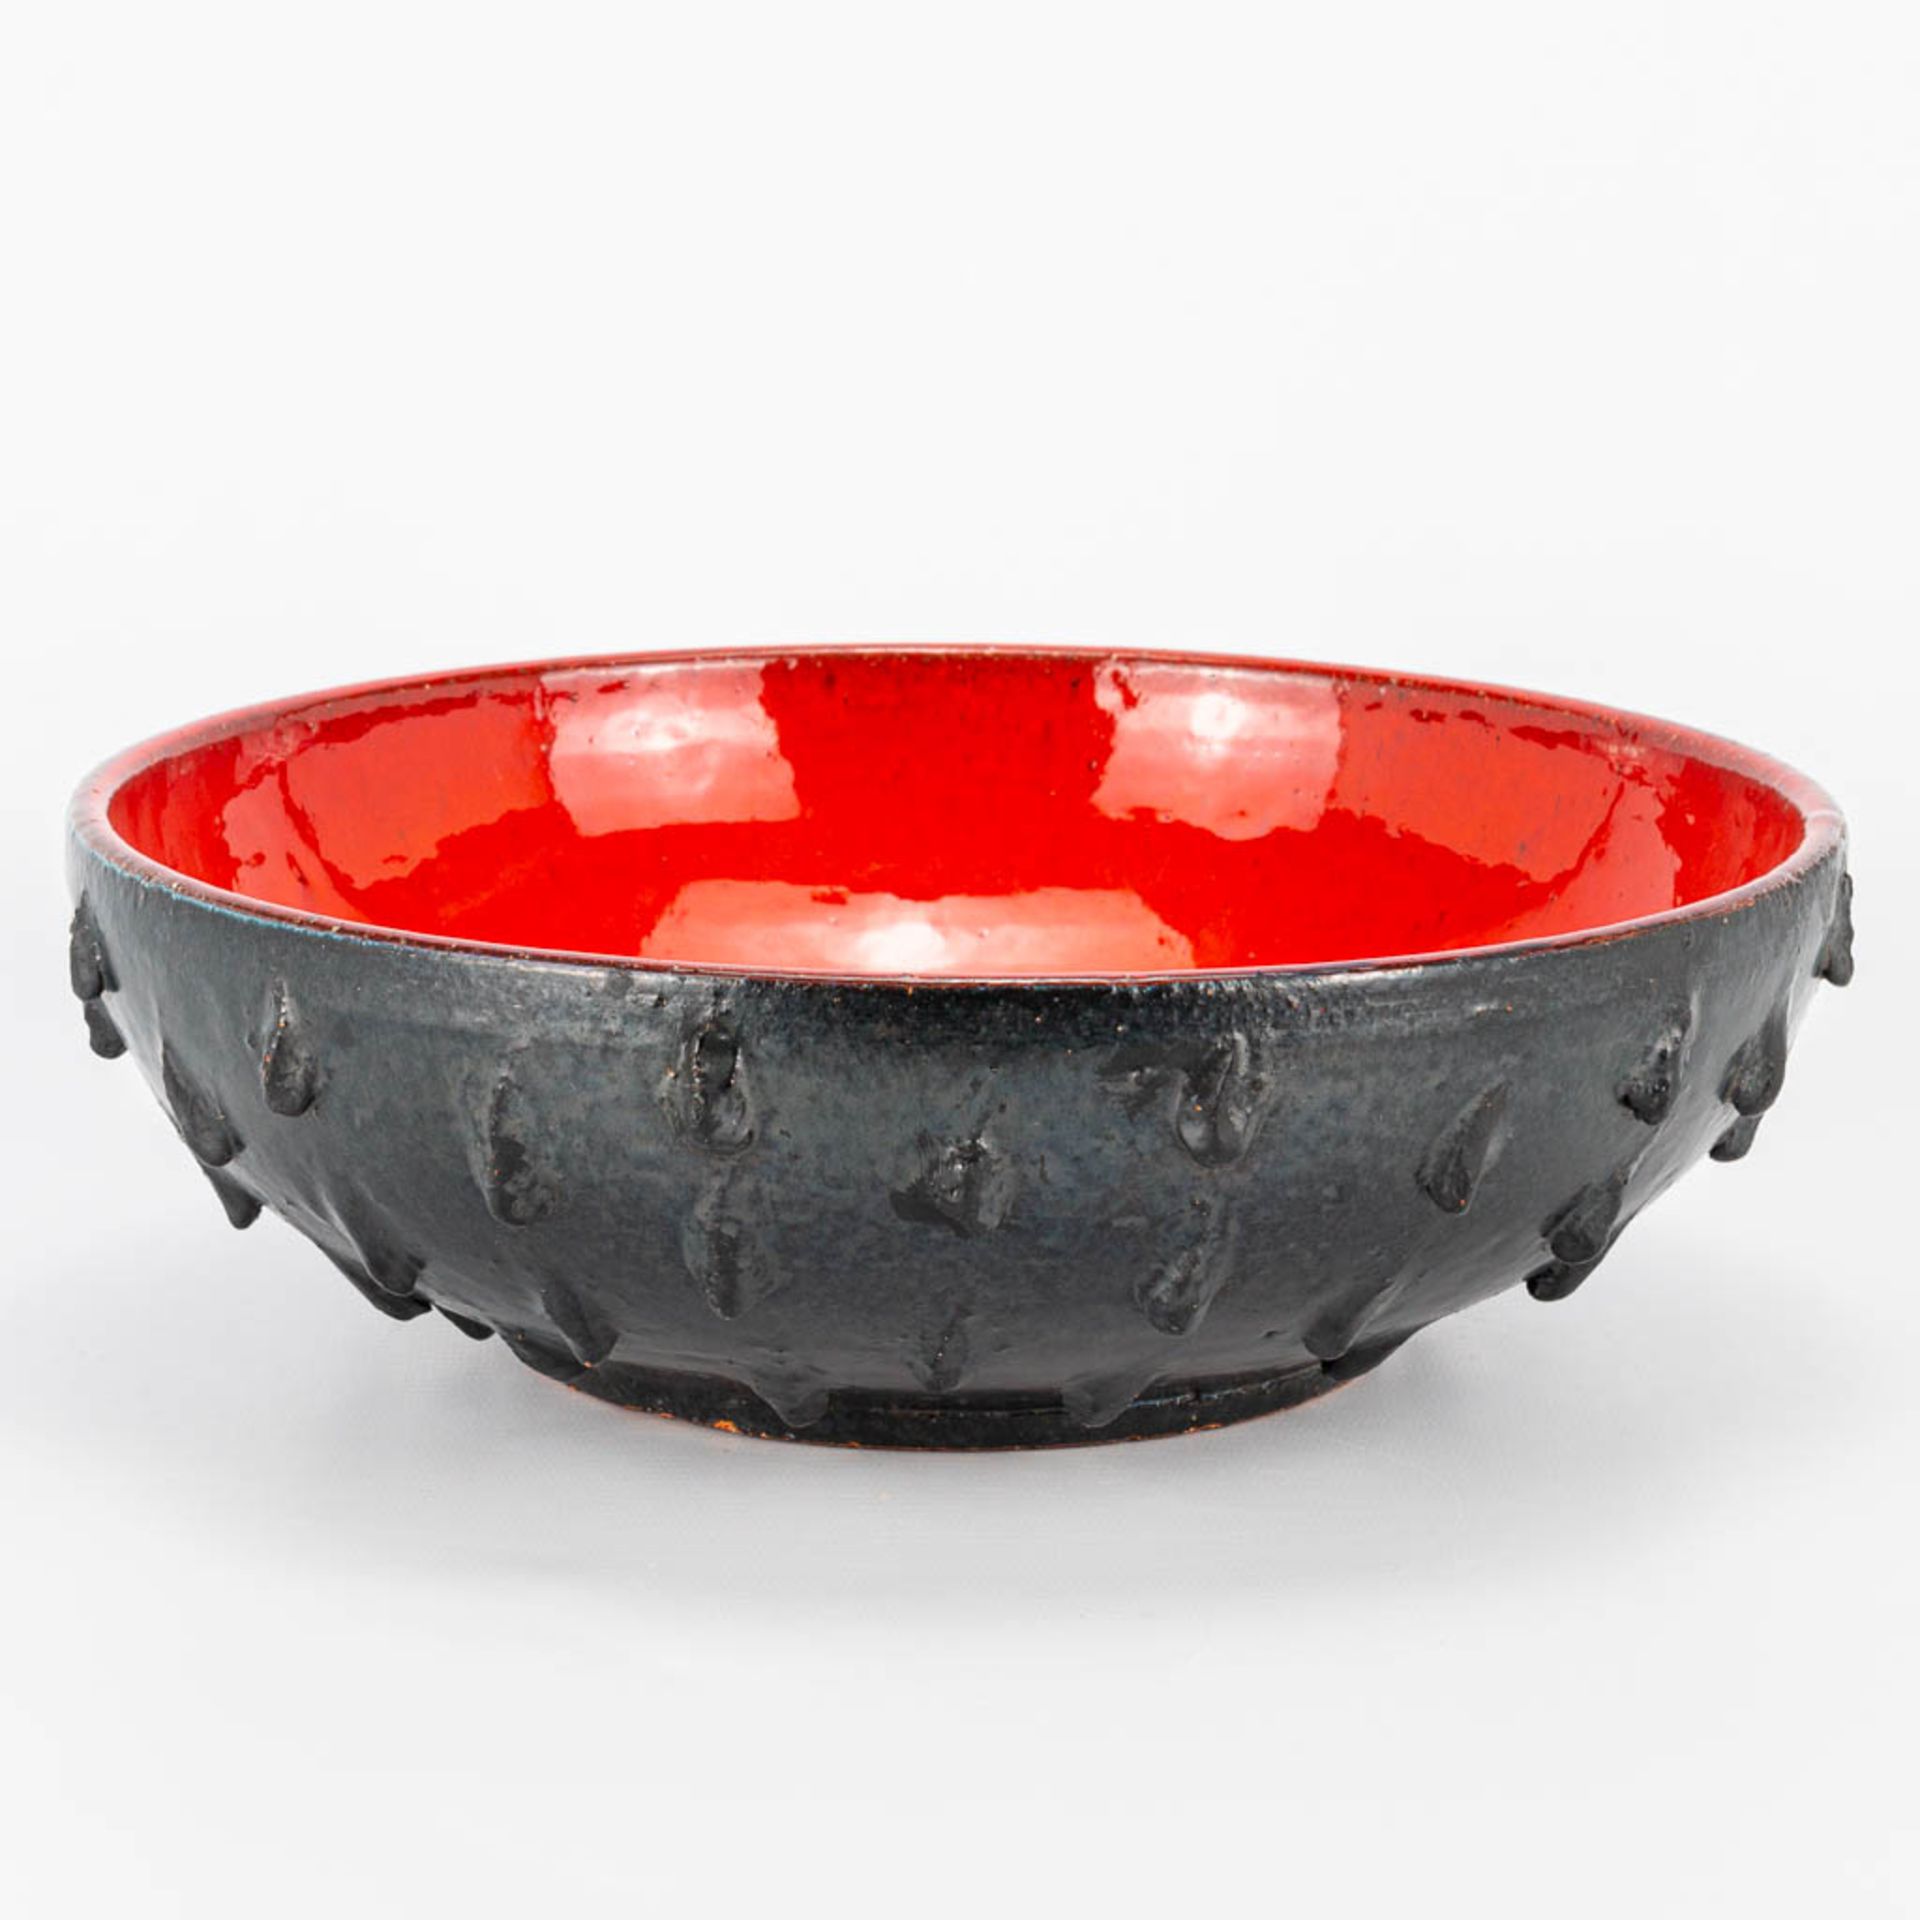 Rogier VANDEWEGHE (1923-2020) For Amphora, a red glazed bowl. (9 x 28 cm) - Image 9 of 12